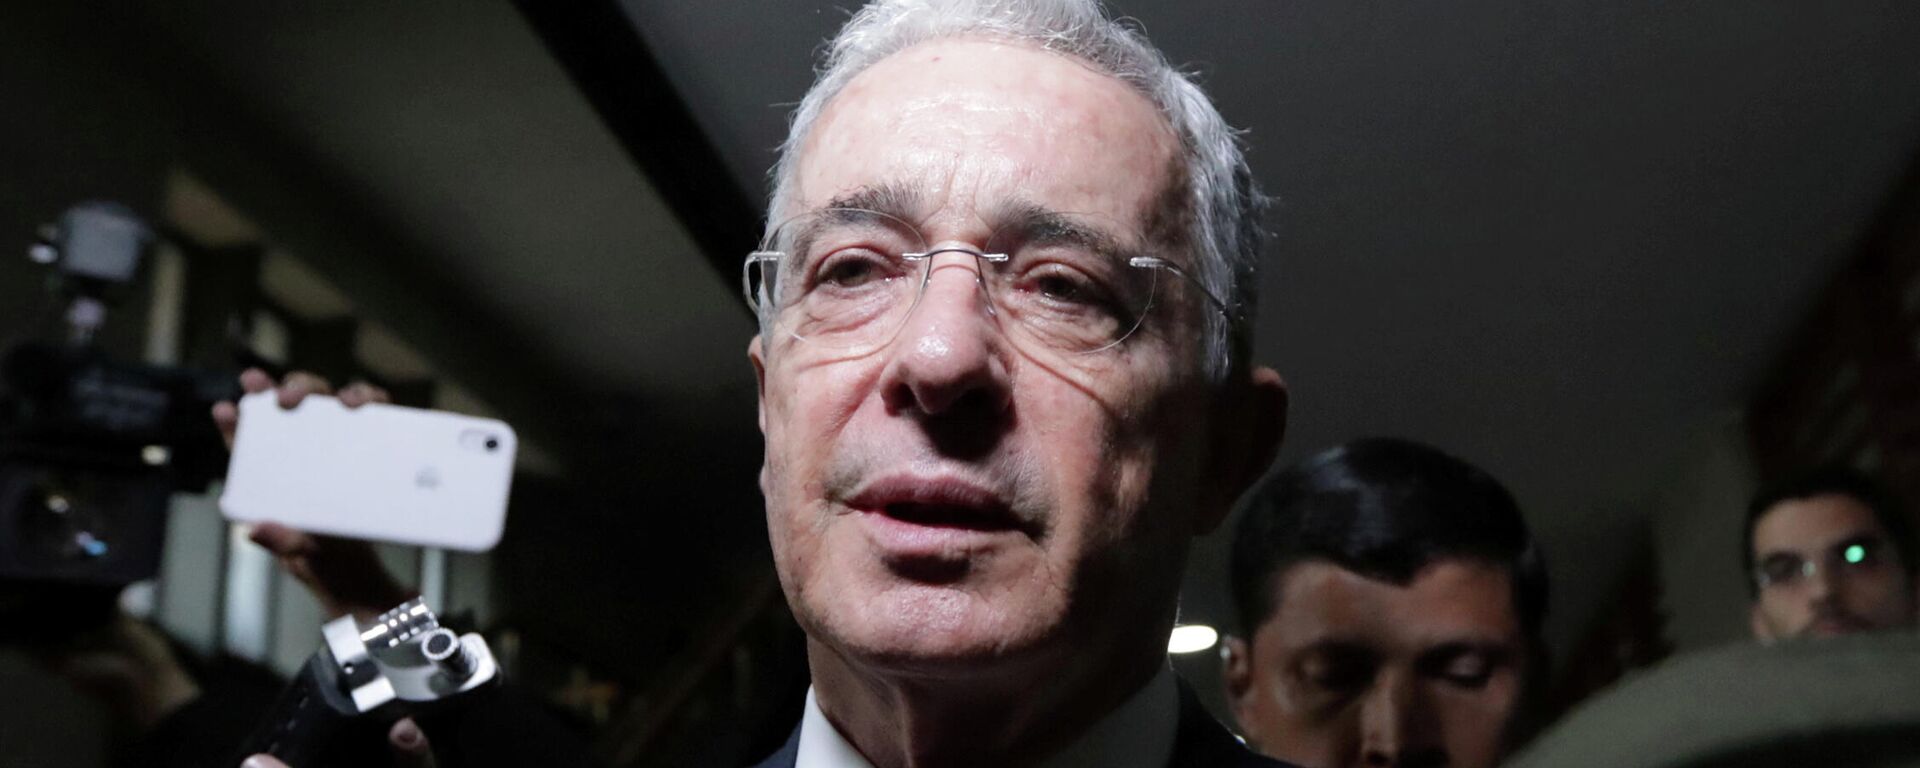 El expresidente colombiano Álvaro Uribe - Sputnik Mundo, 1920, 06.03.2021